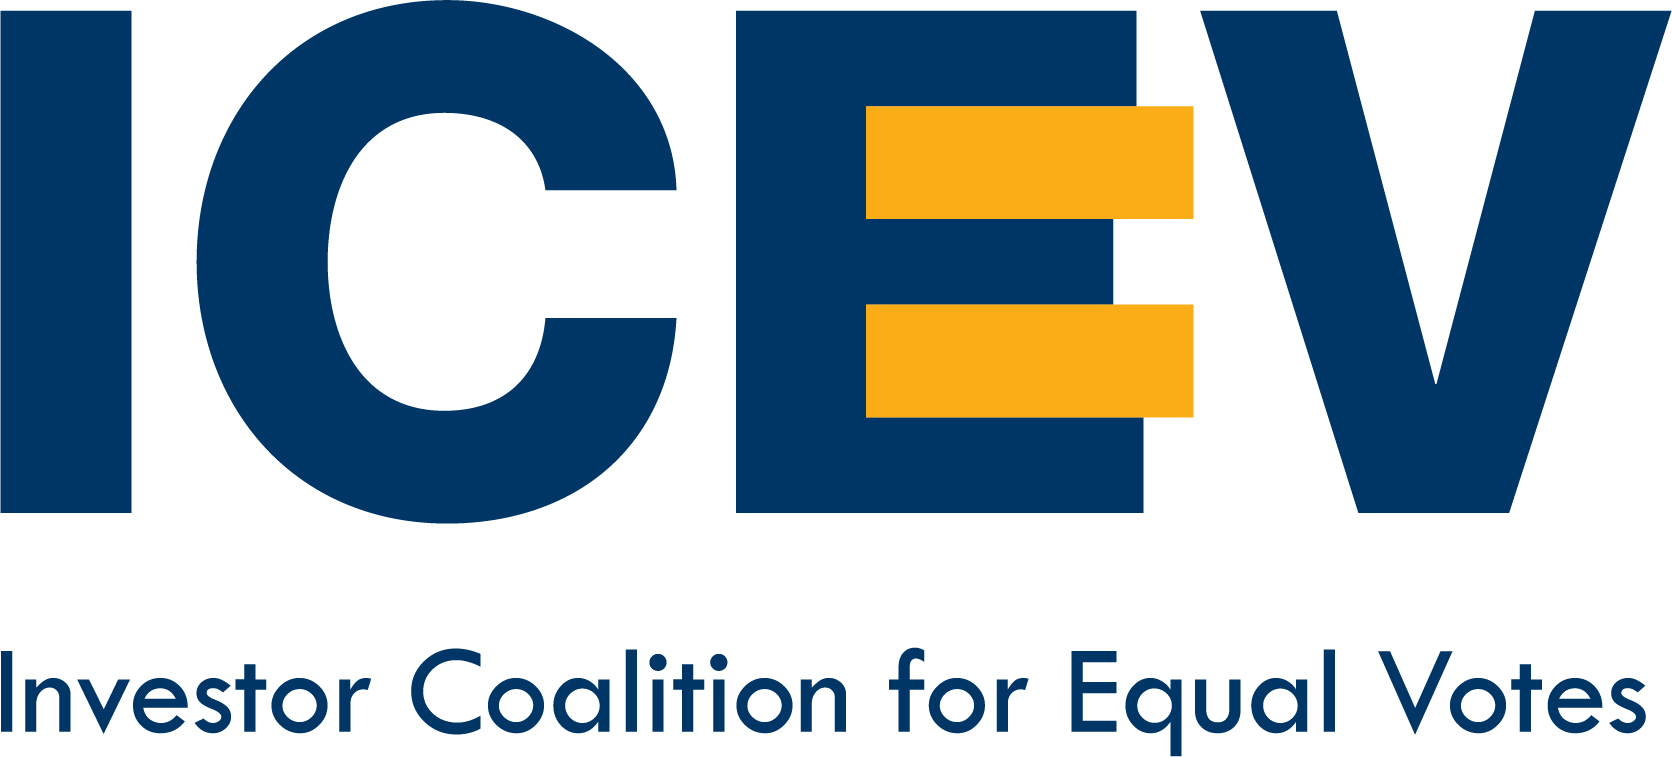 Image shows ICEV logo